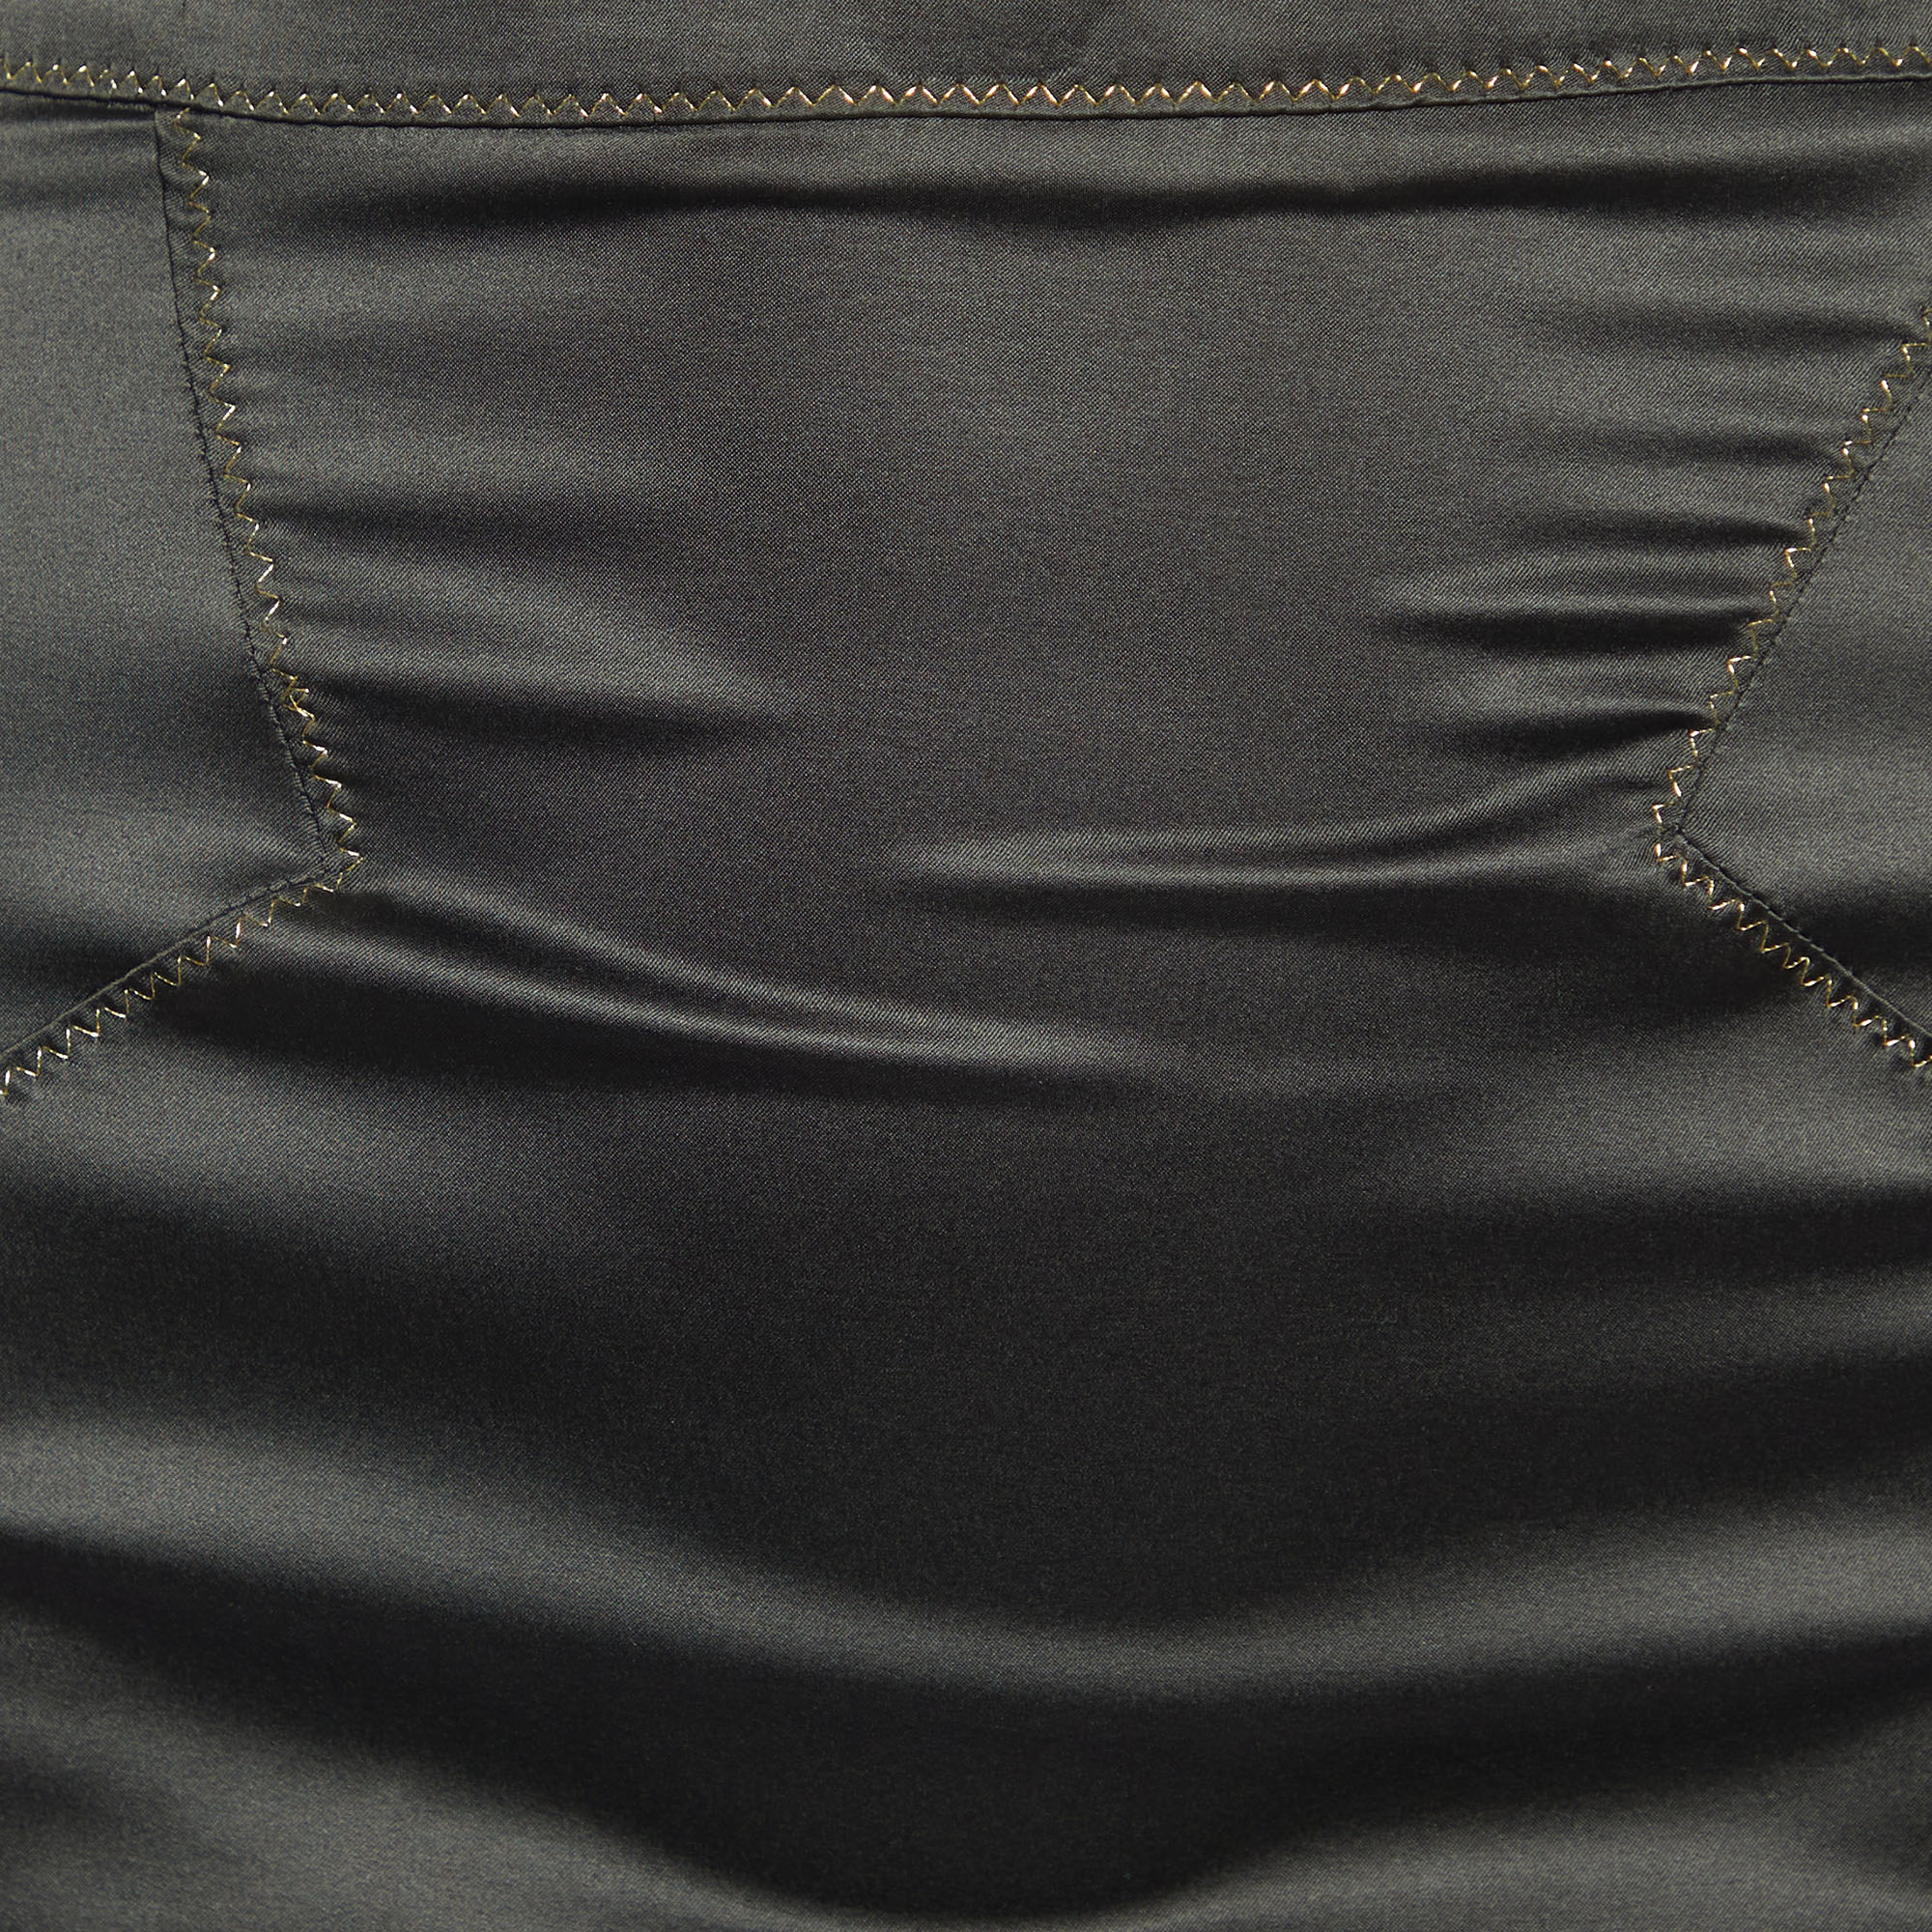 Just Cavalli Black Satin Contrast Detail Skirt M